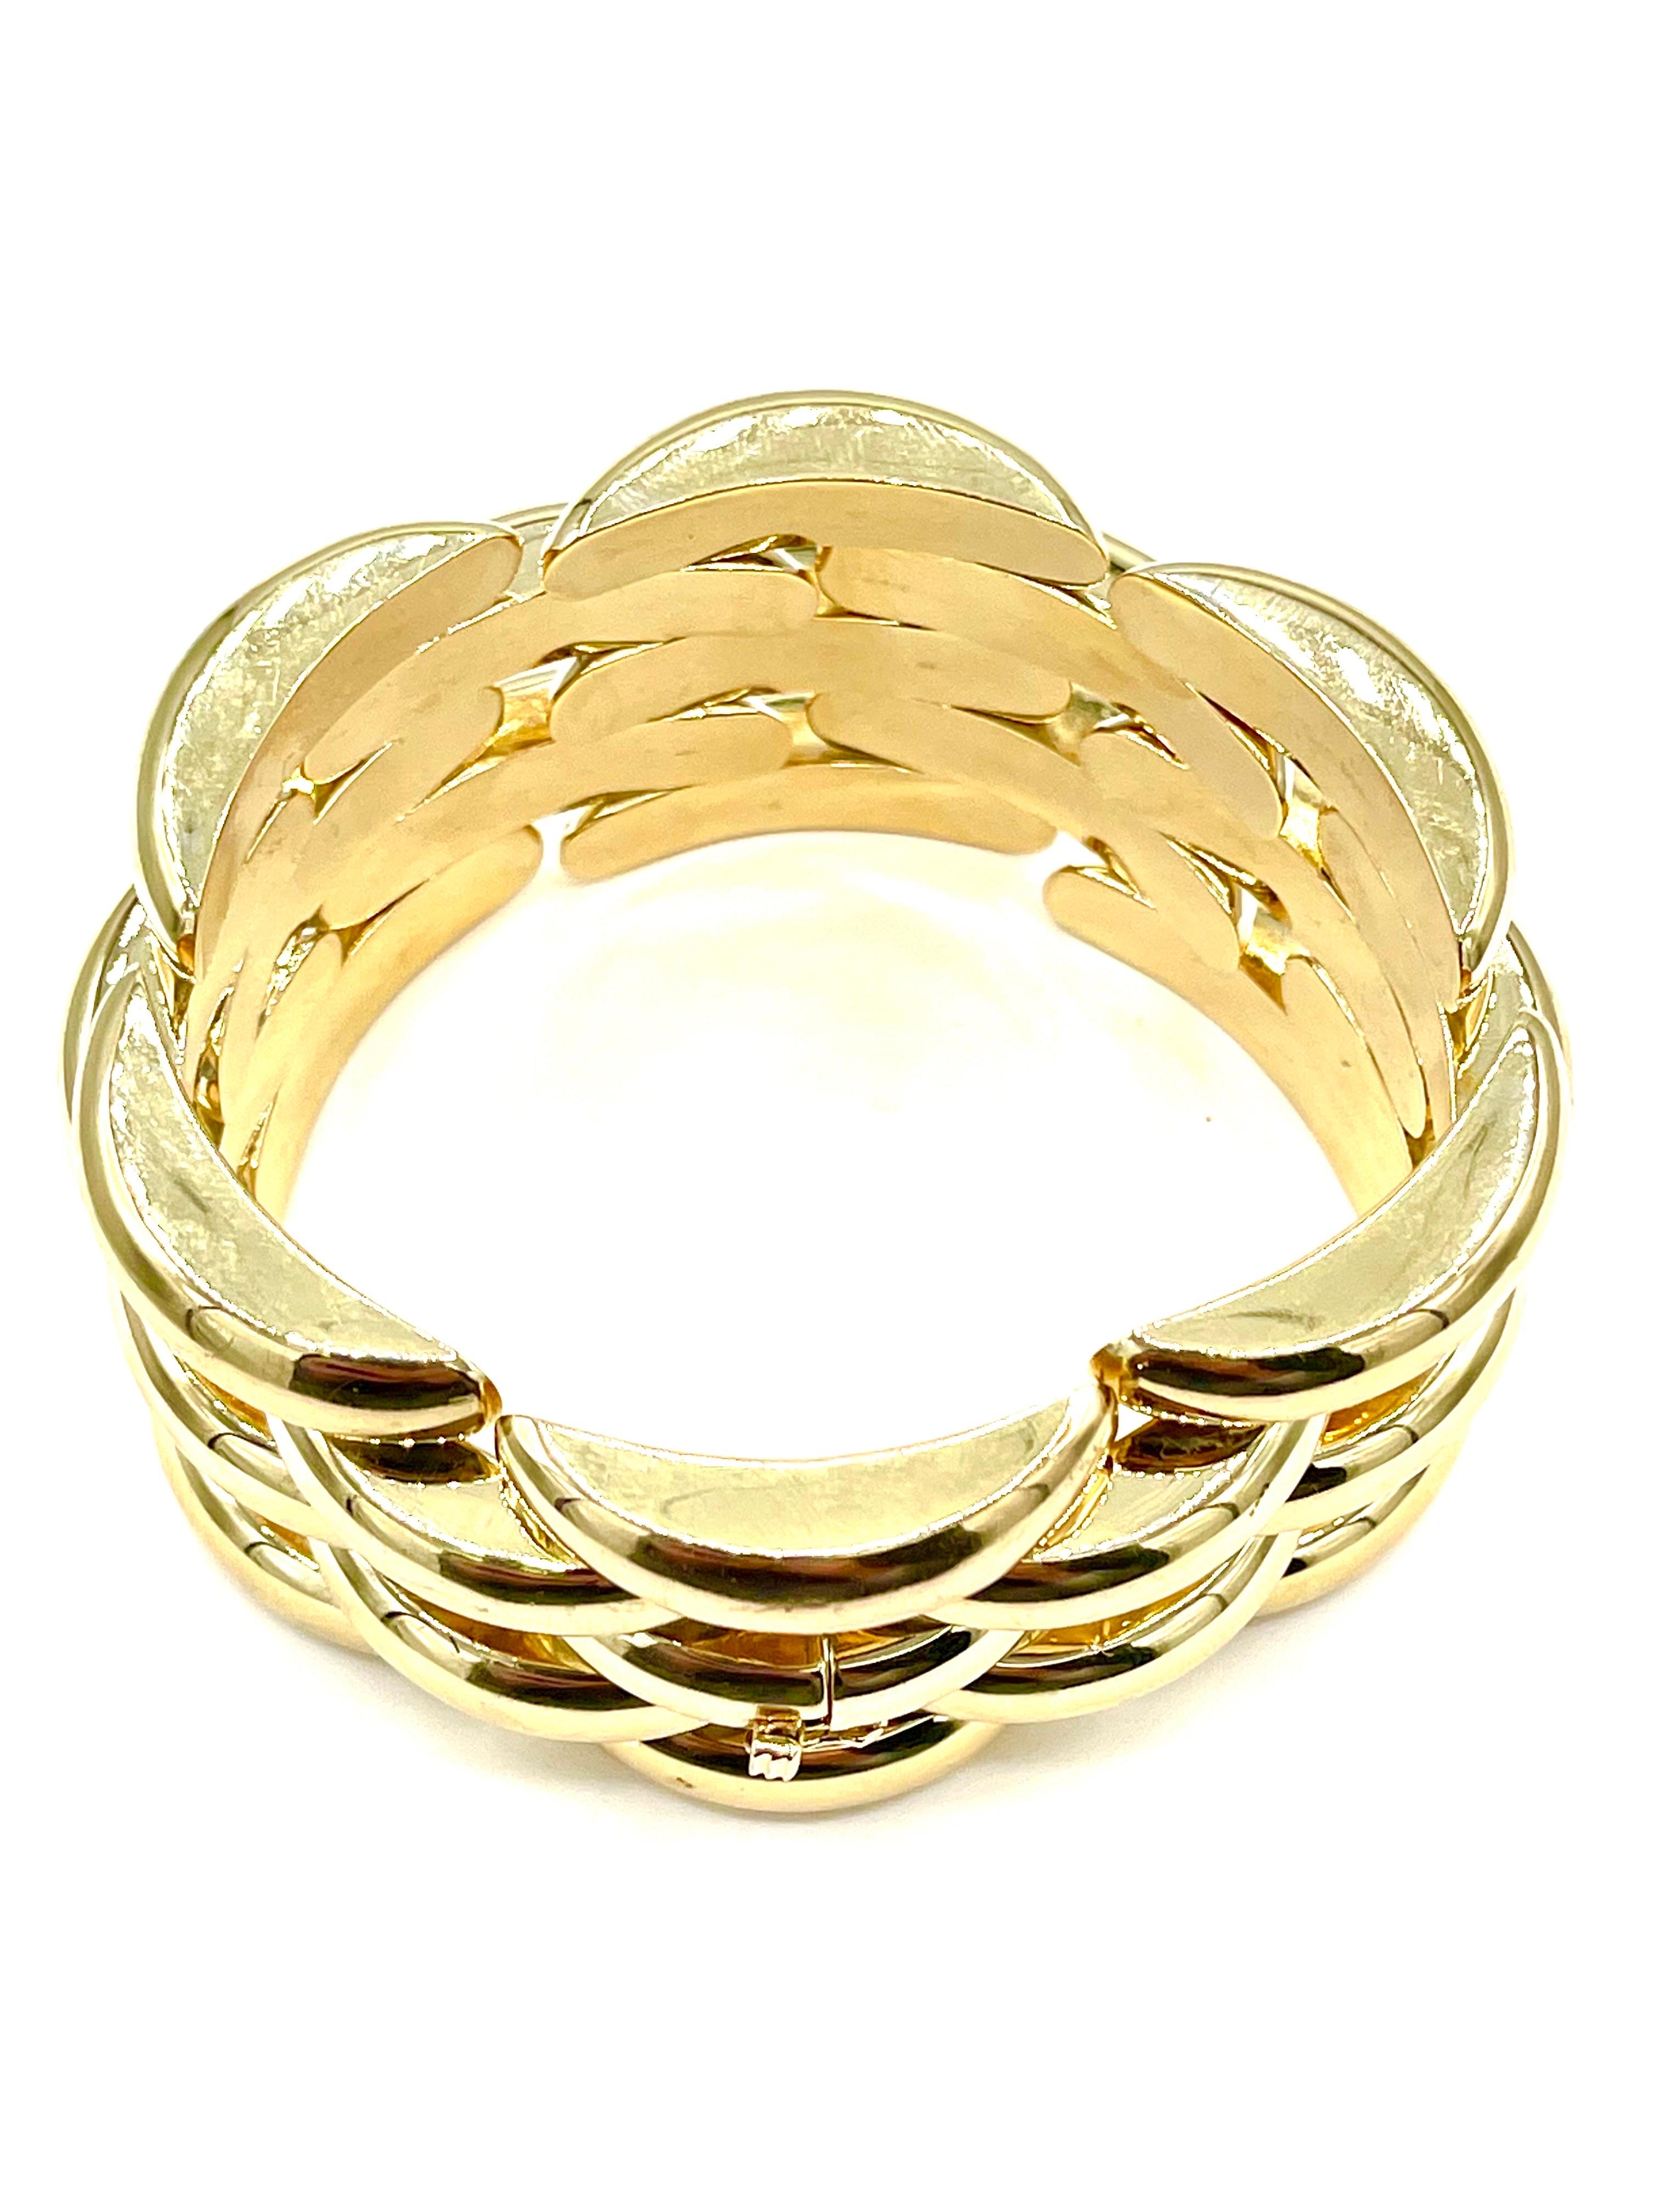 Women's or Men's Wide Five Row Link Bracelet in 14K Yellow Gold